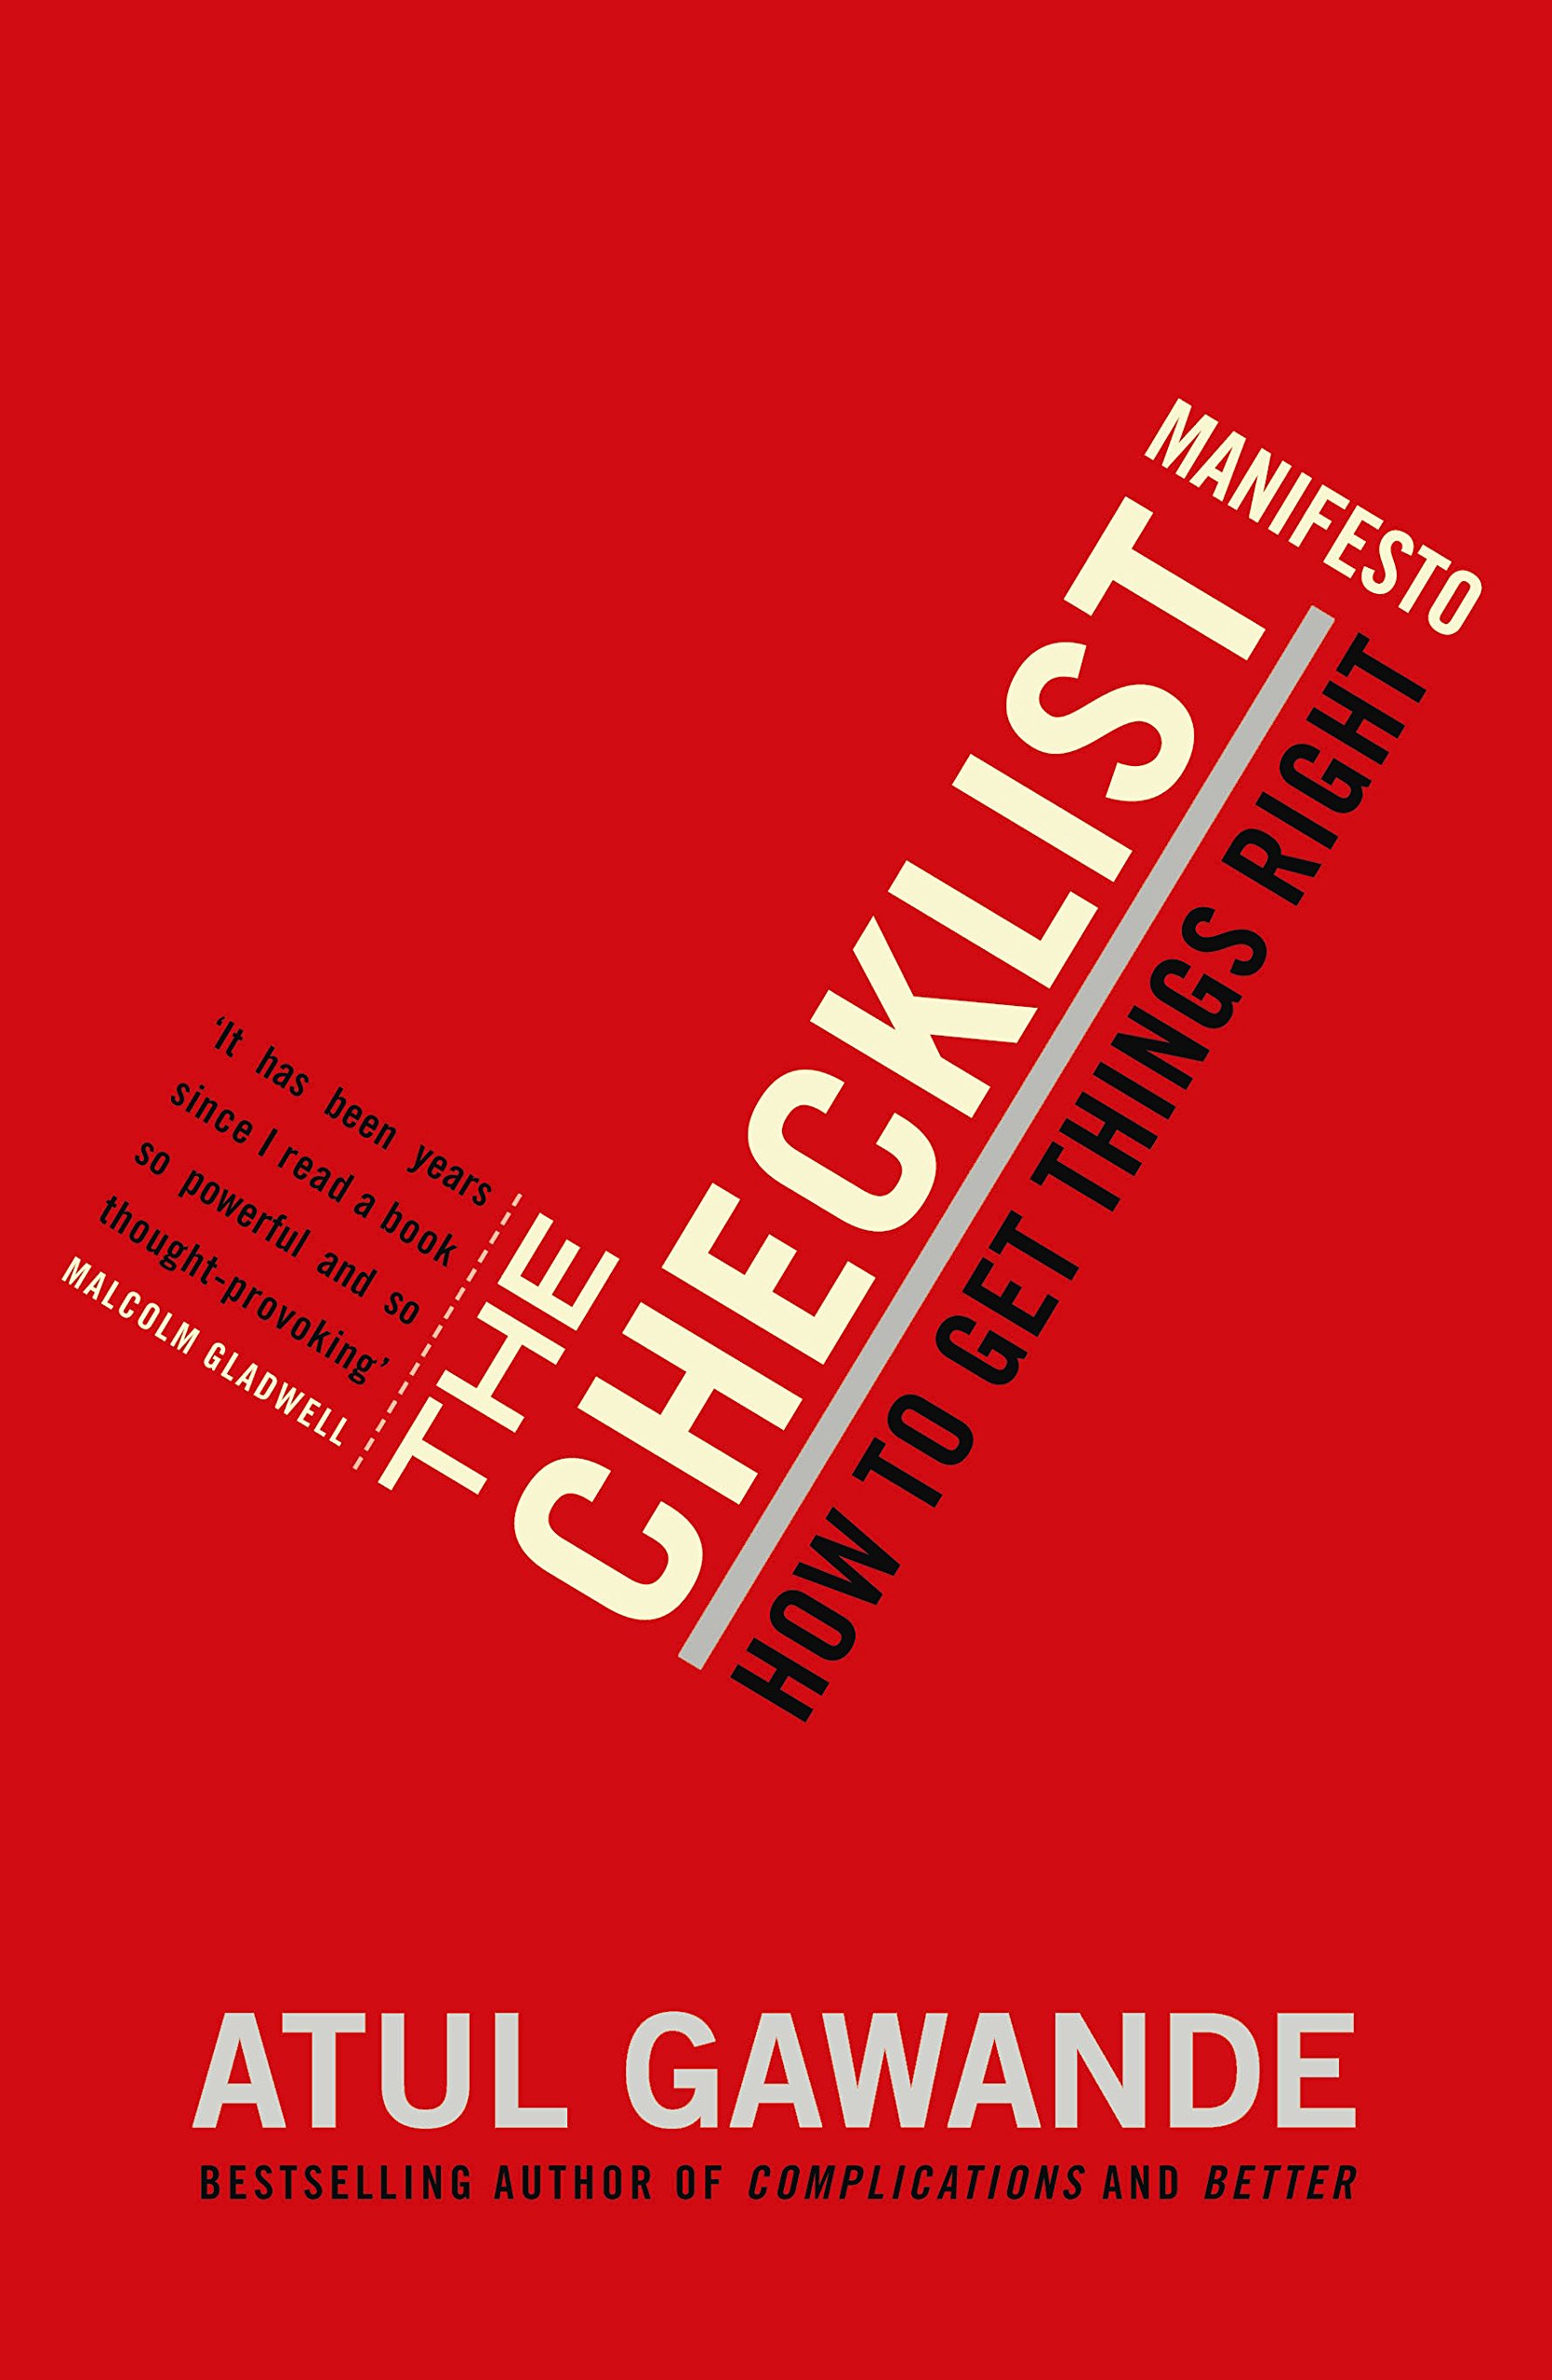 Book "The Manifesto Checklist", Atul Gawande